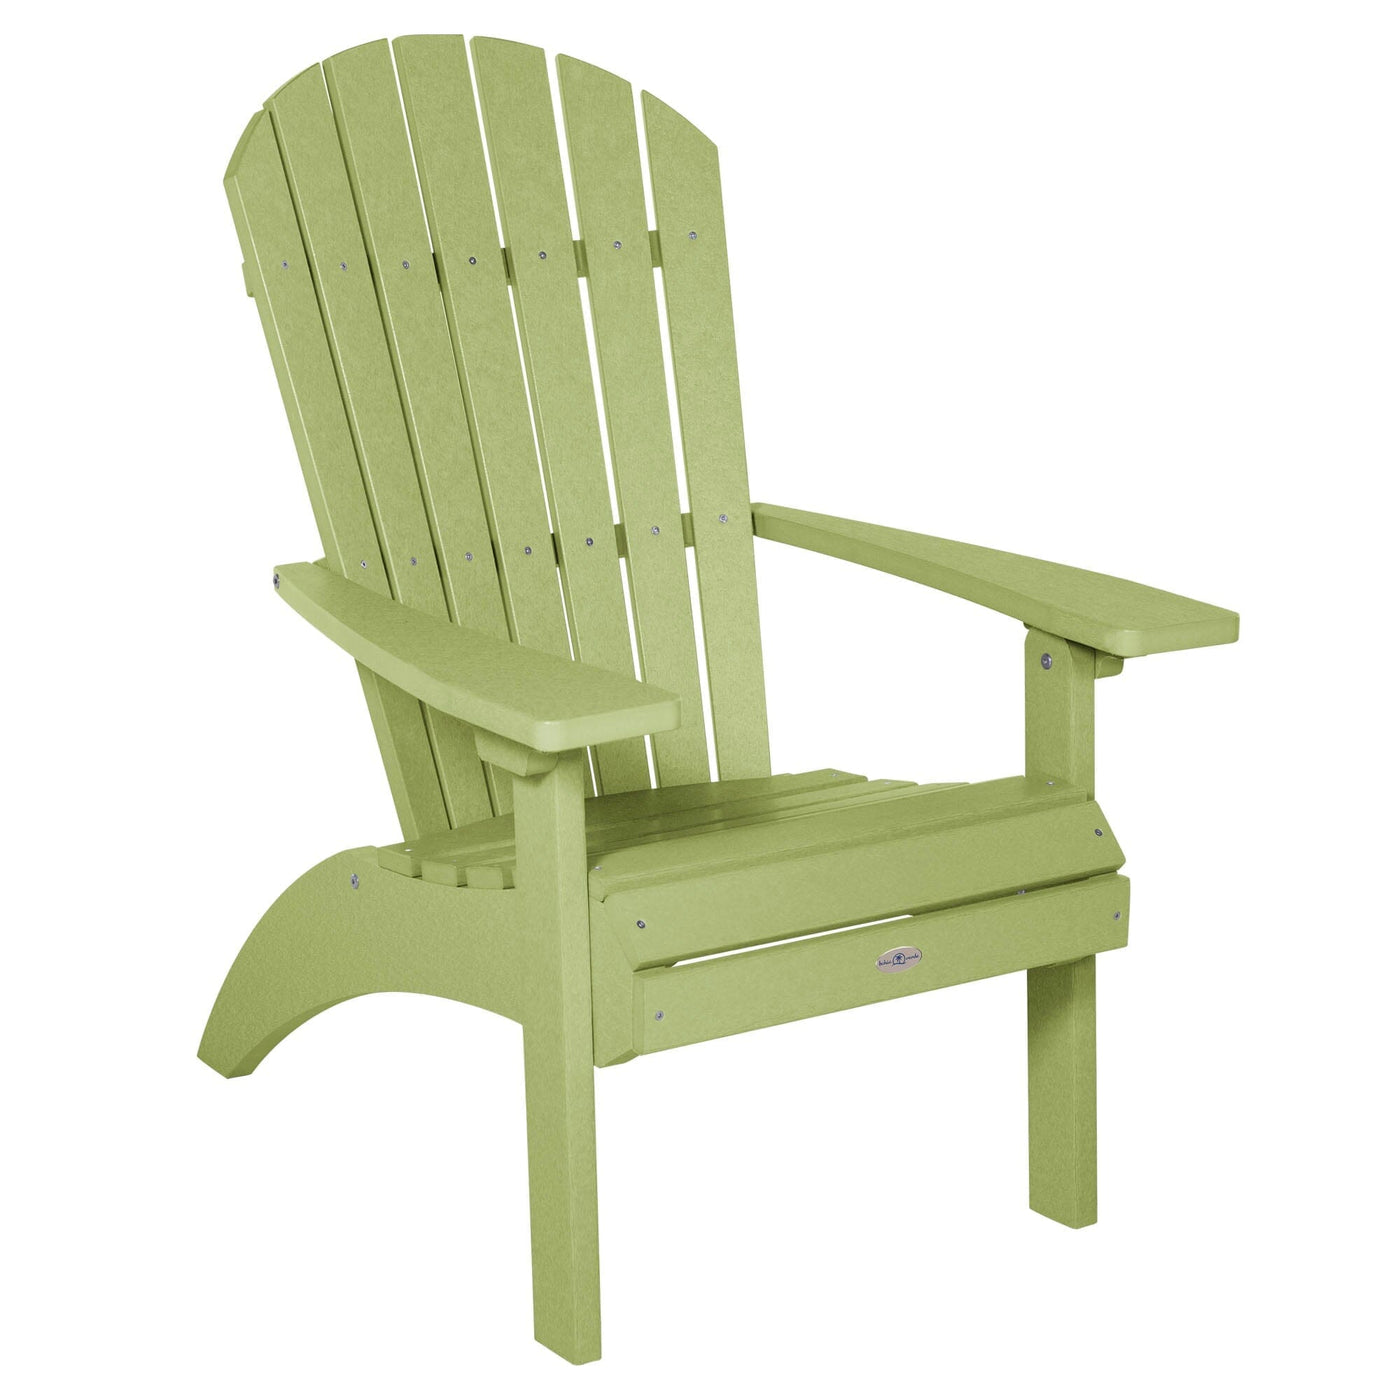 Waterfall Comfort Height Adirondack Chair Chair Bahia Verde Outdoors Palm Green 